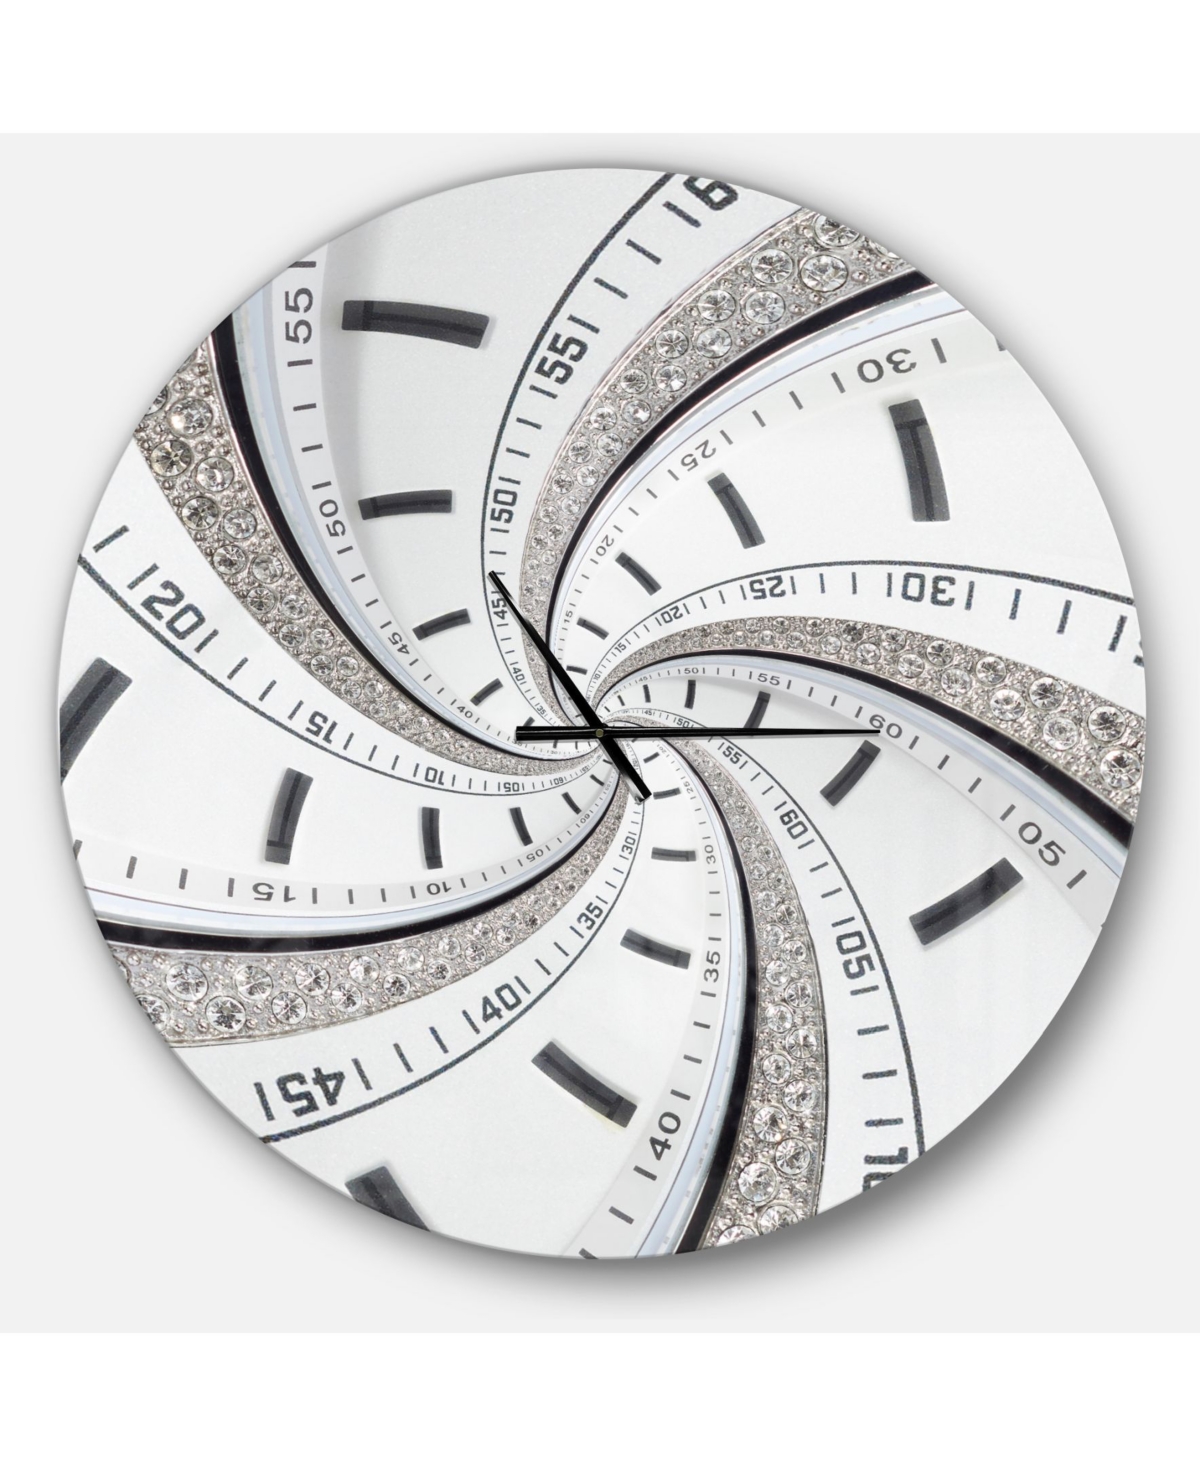 Designart Oversized Contemporary Round Metal Wall Clock - 36 x 36